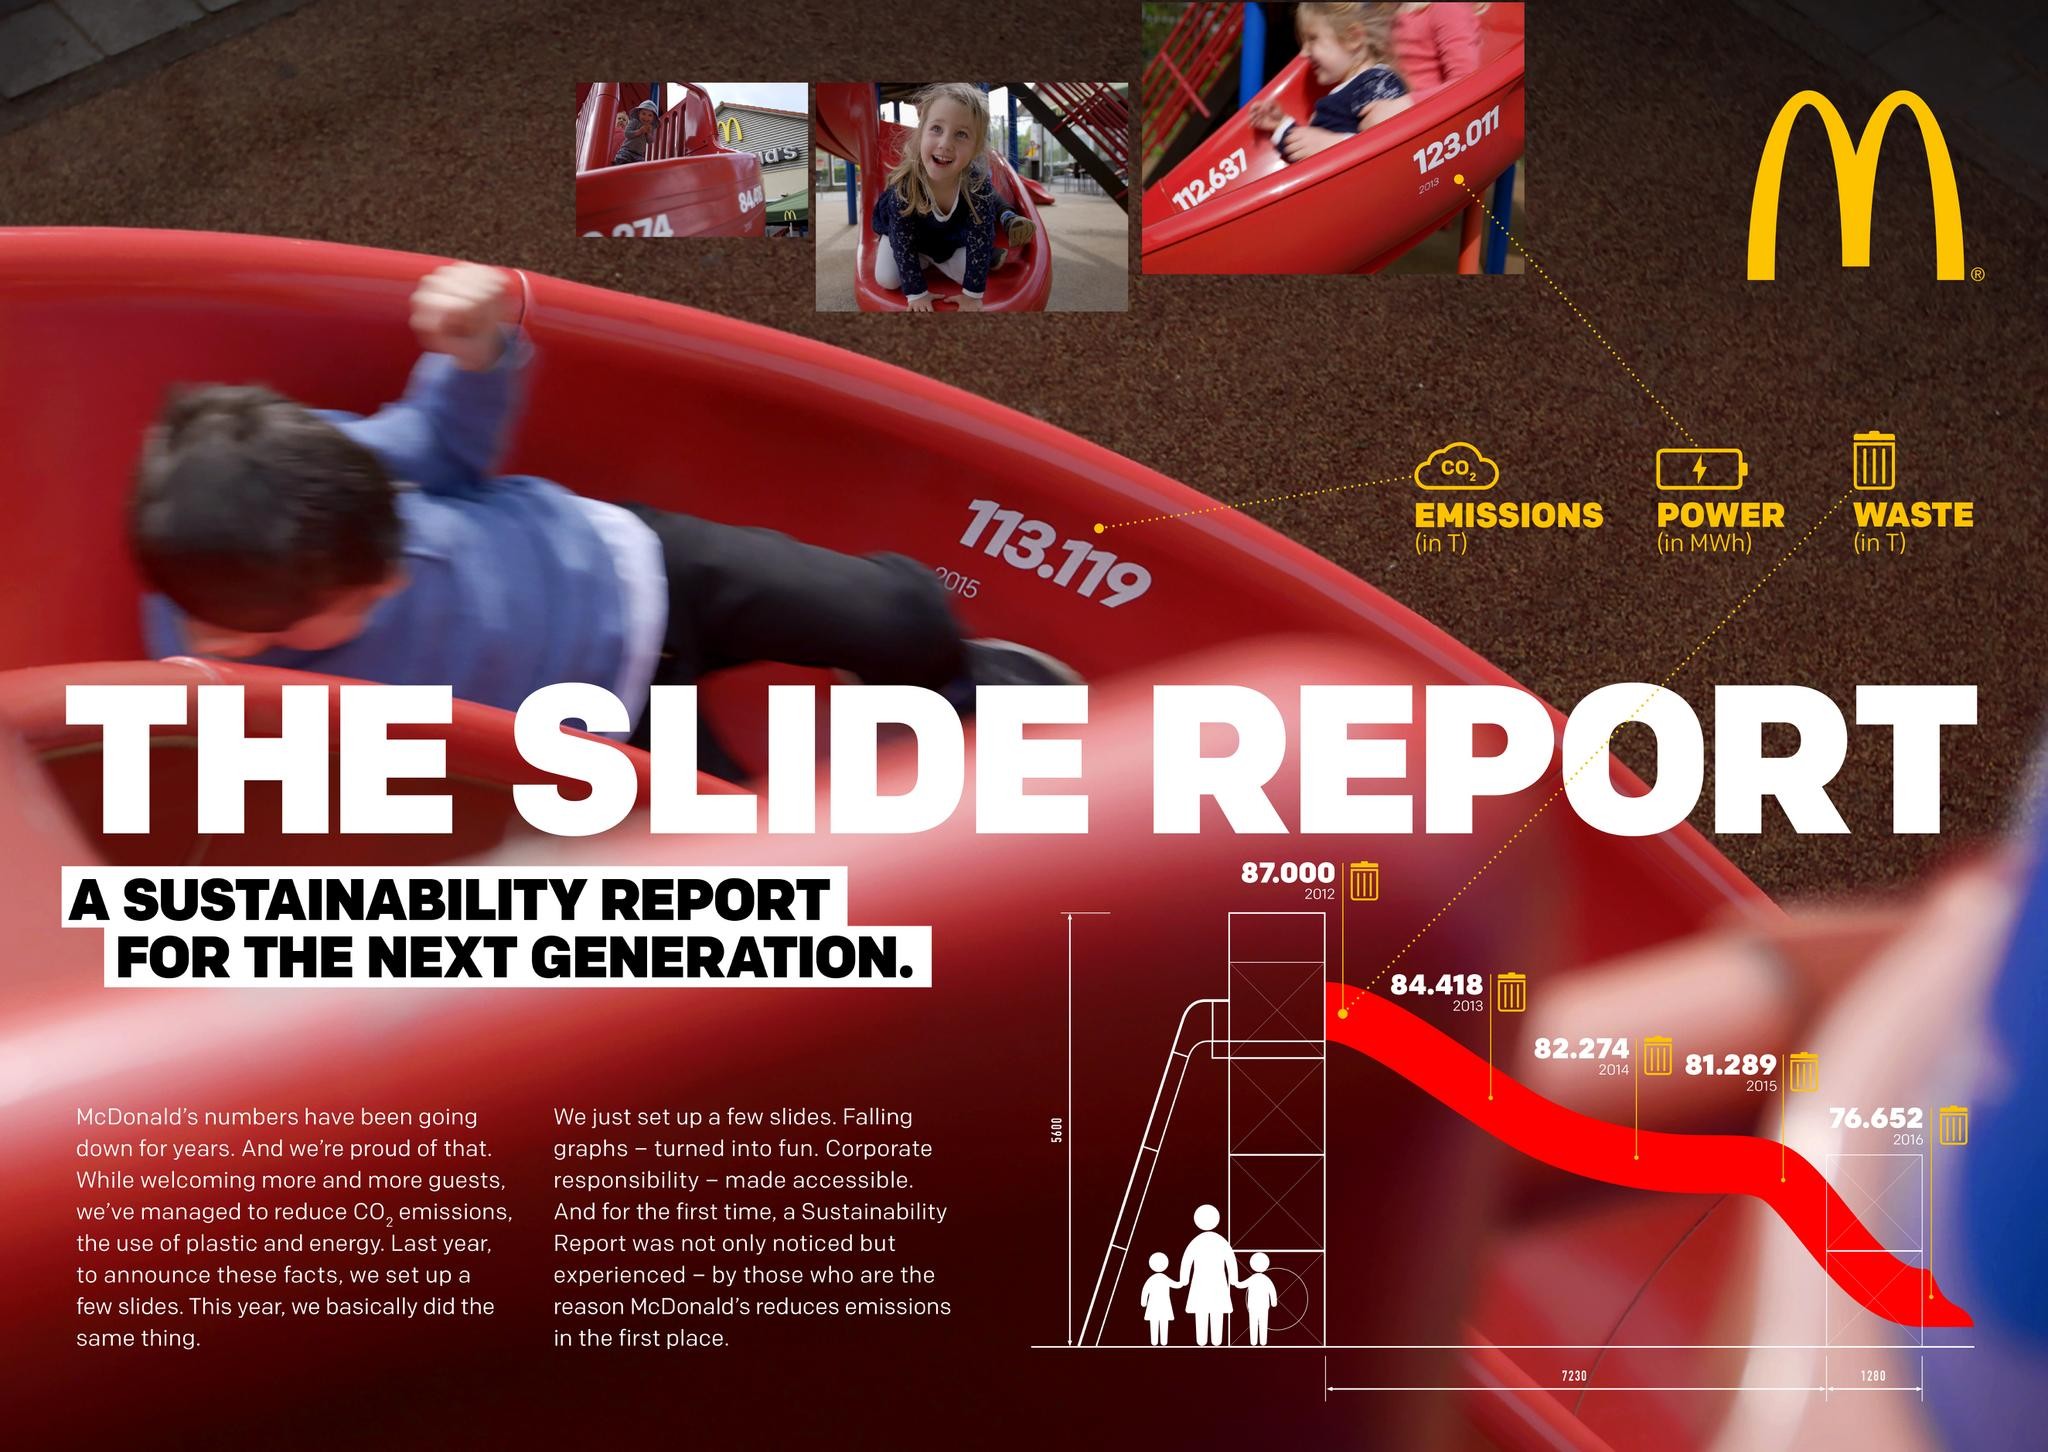 The Slide Report